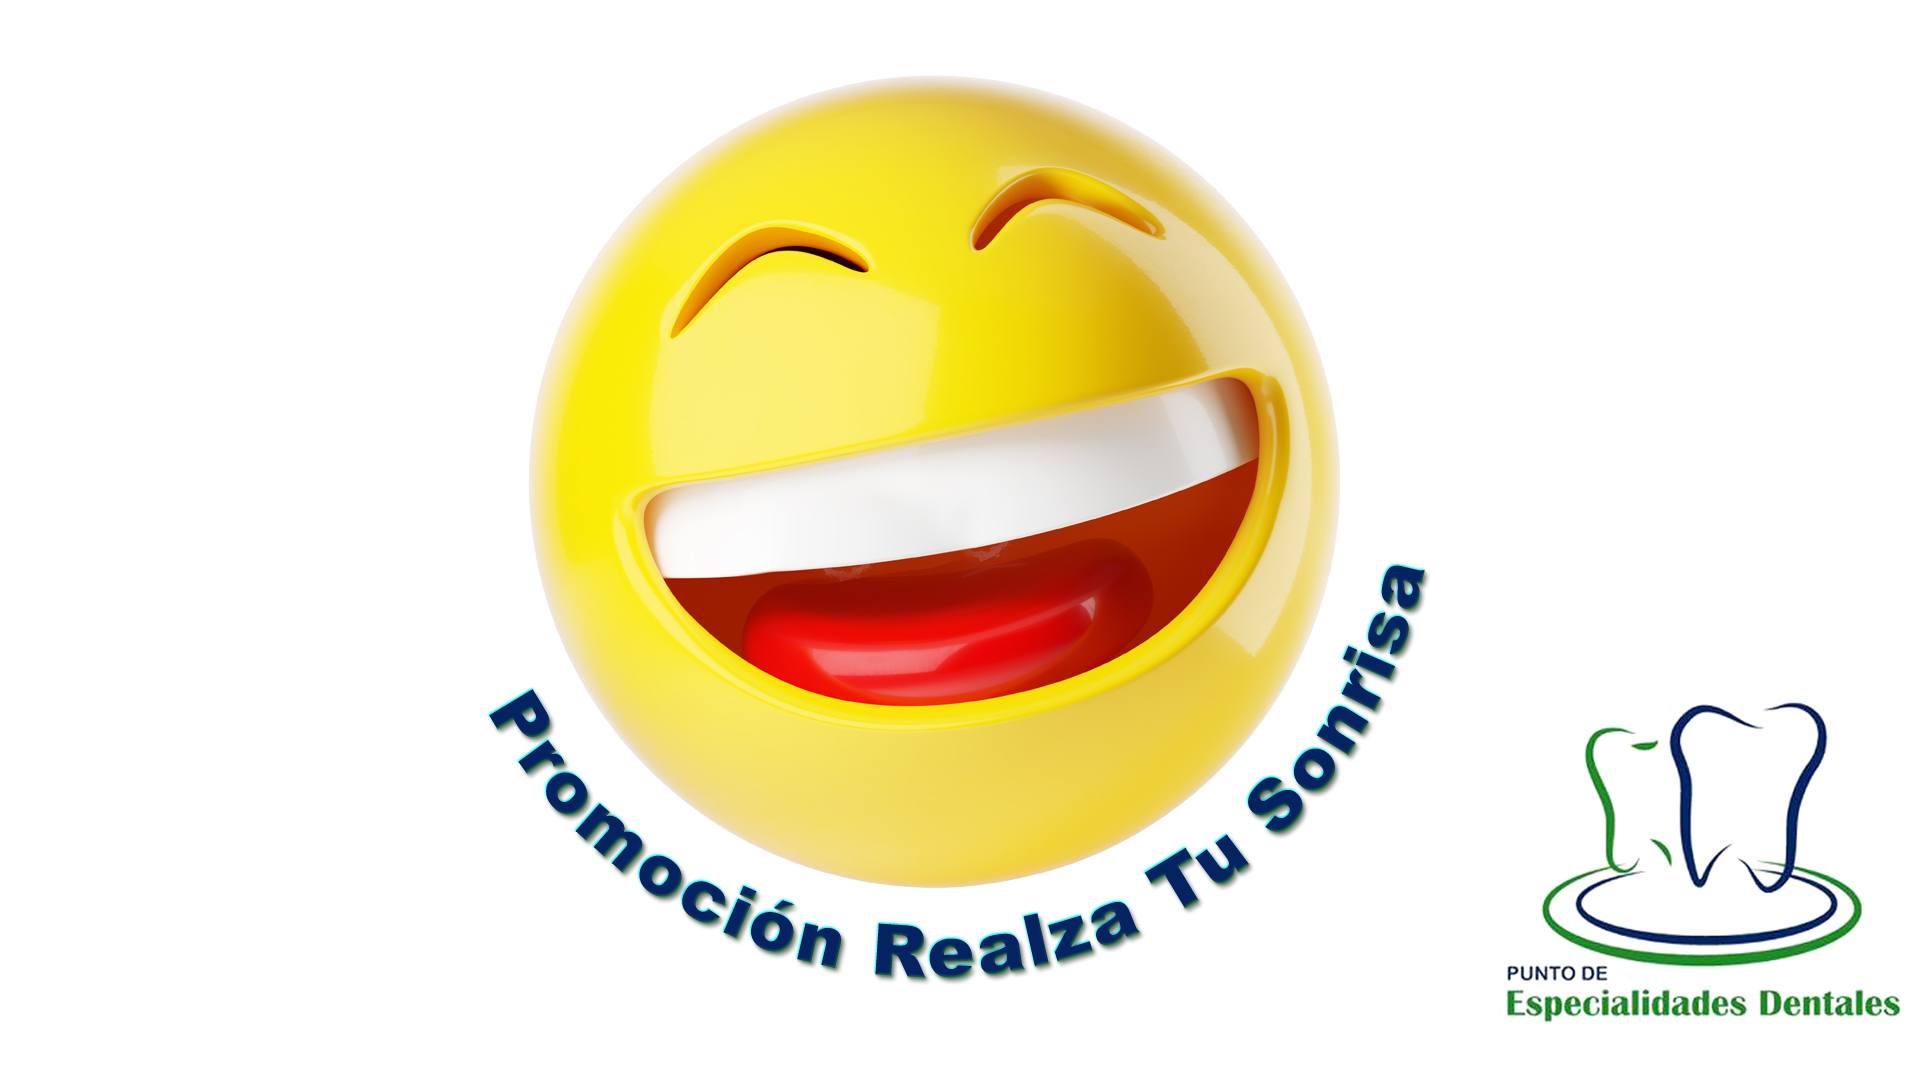 Puntos De Especialidades Dentales lanza "Promoción Realza Tu Sonrisa" 😁 Consulta GRATIS